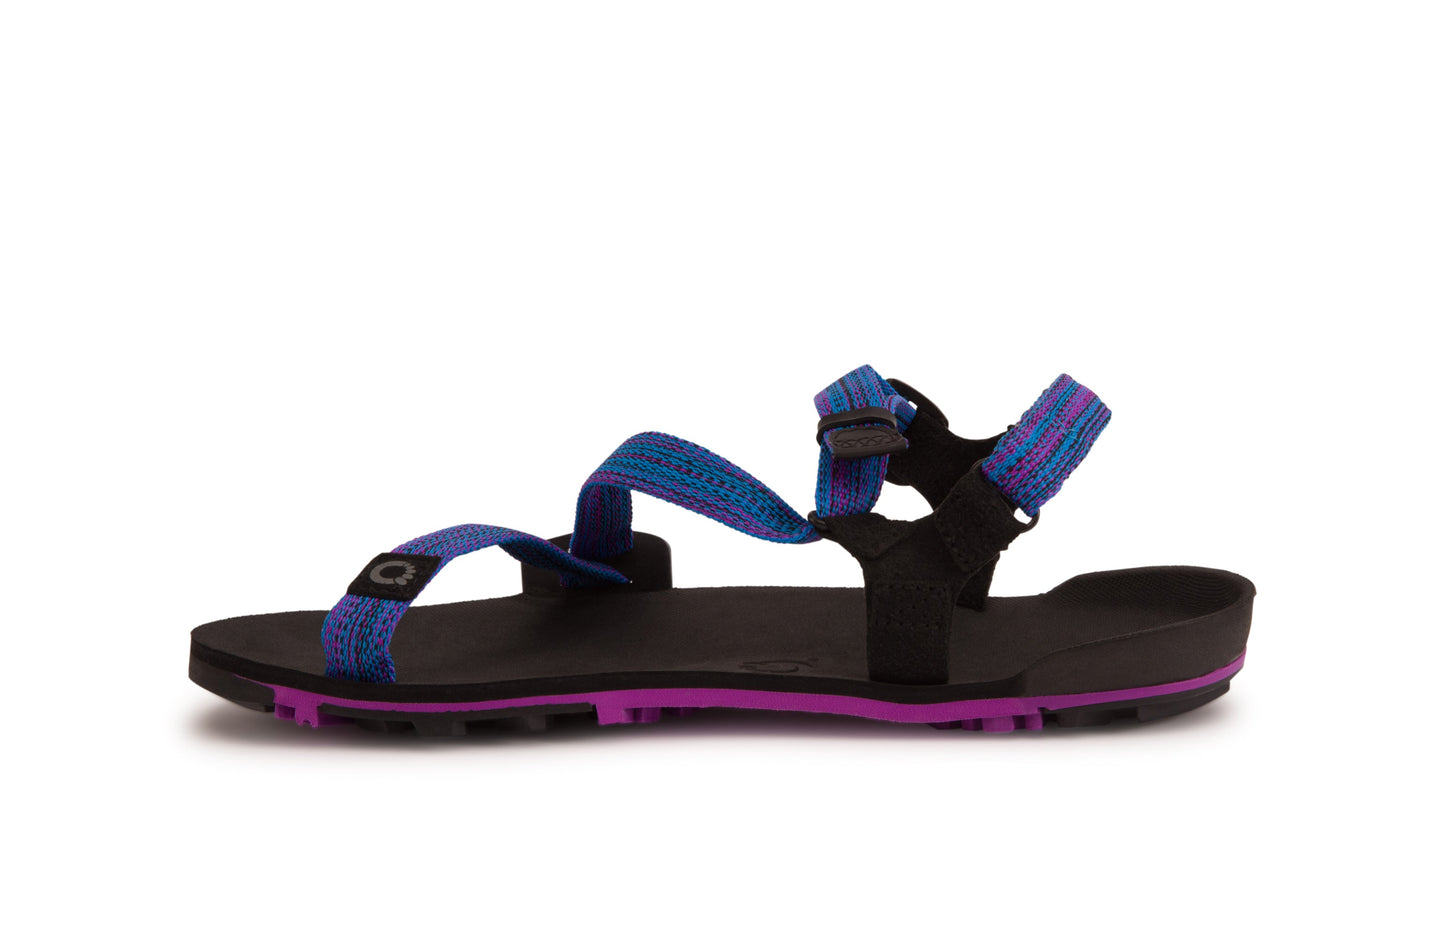 Xero Shoes Z-Trail EV Women barfods sandaler til kvinder i farven bright blue, inderside